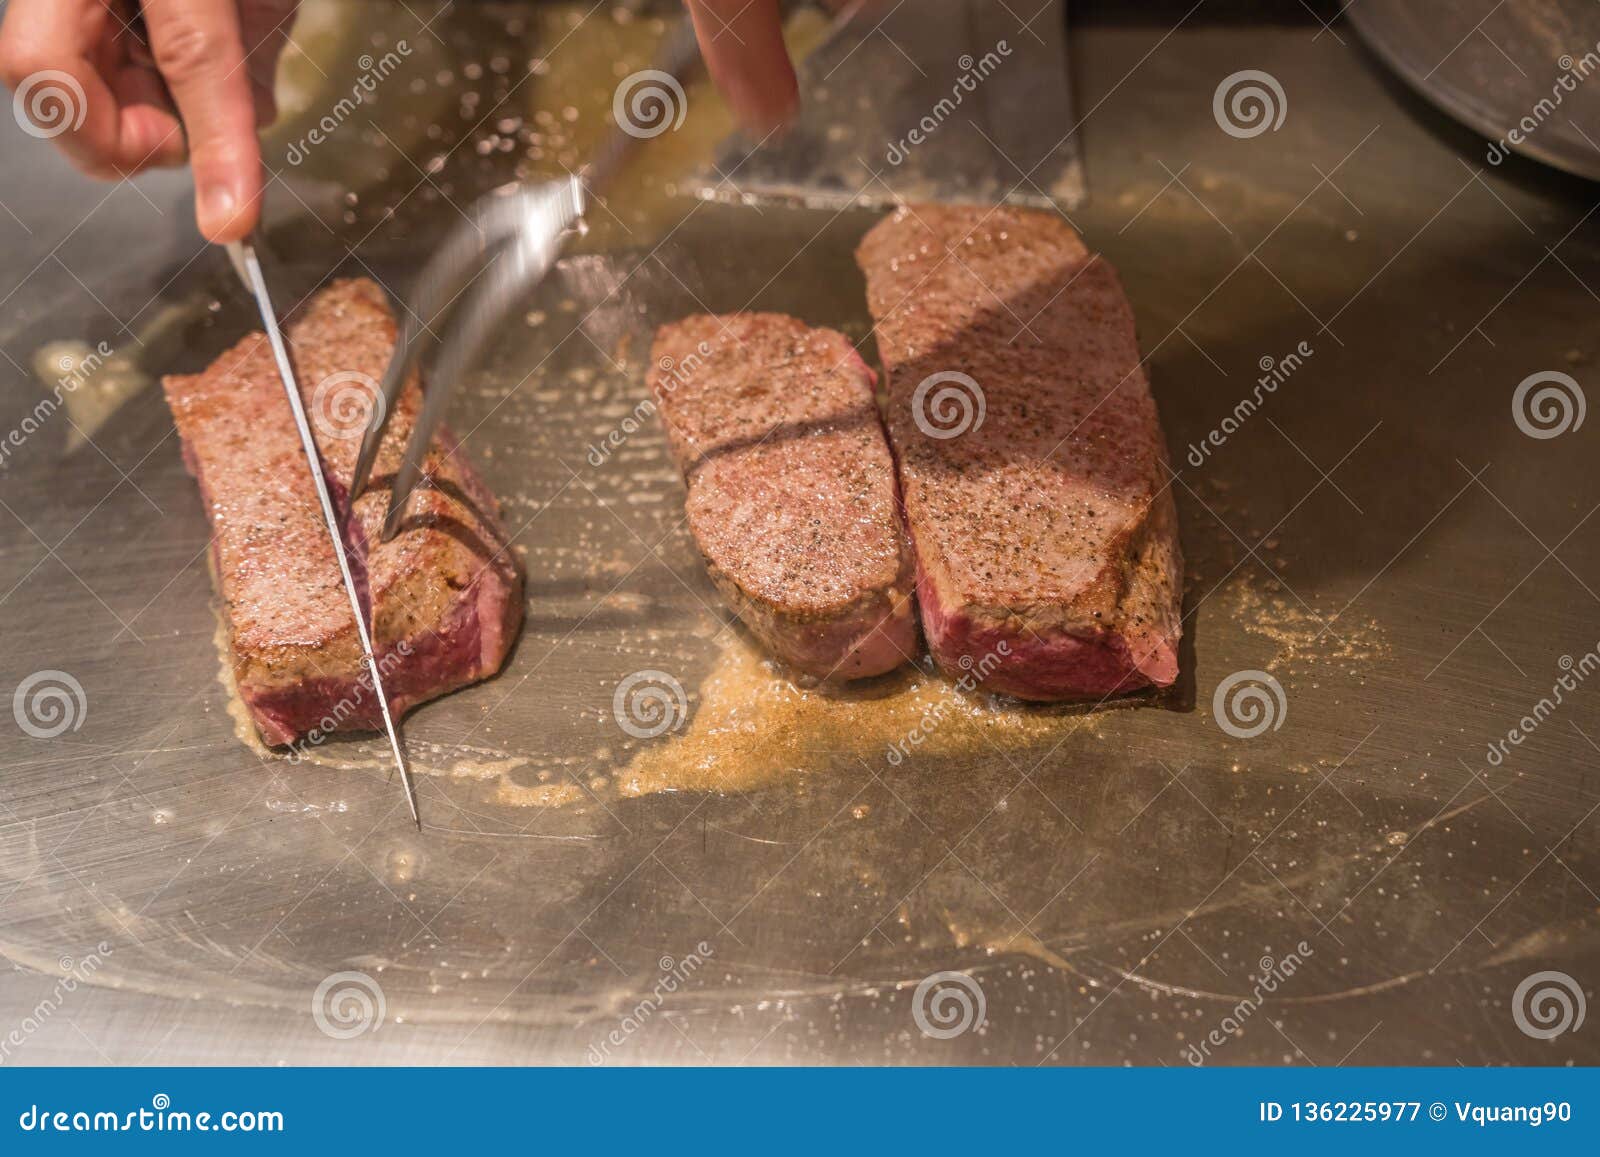 Japanese Chef Cook Grilled Wagyu Kobe Beef Steak Stock ...